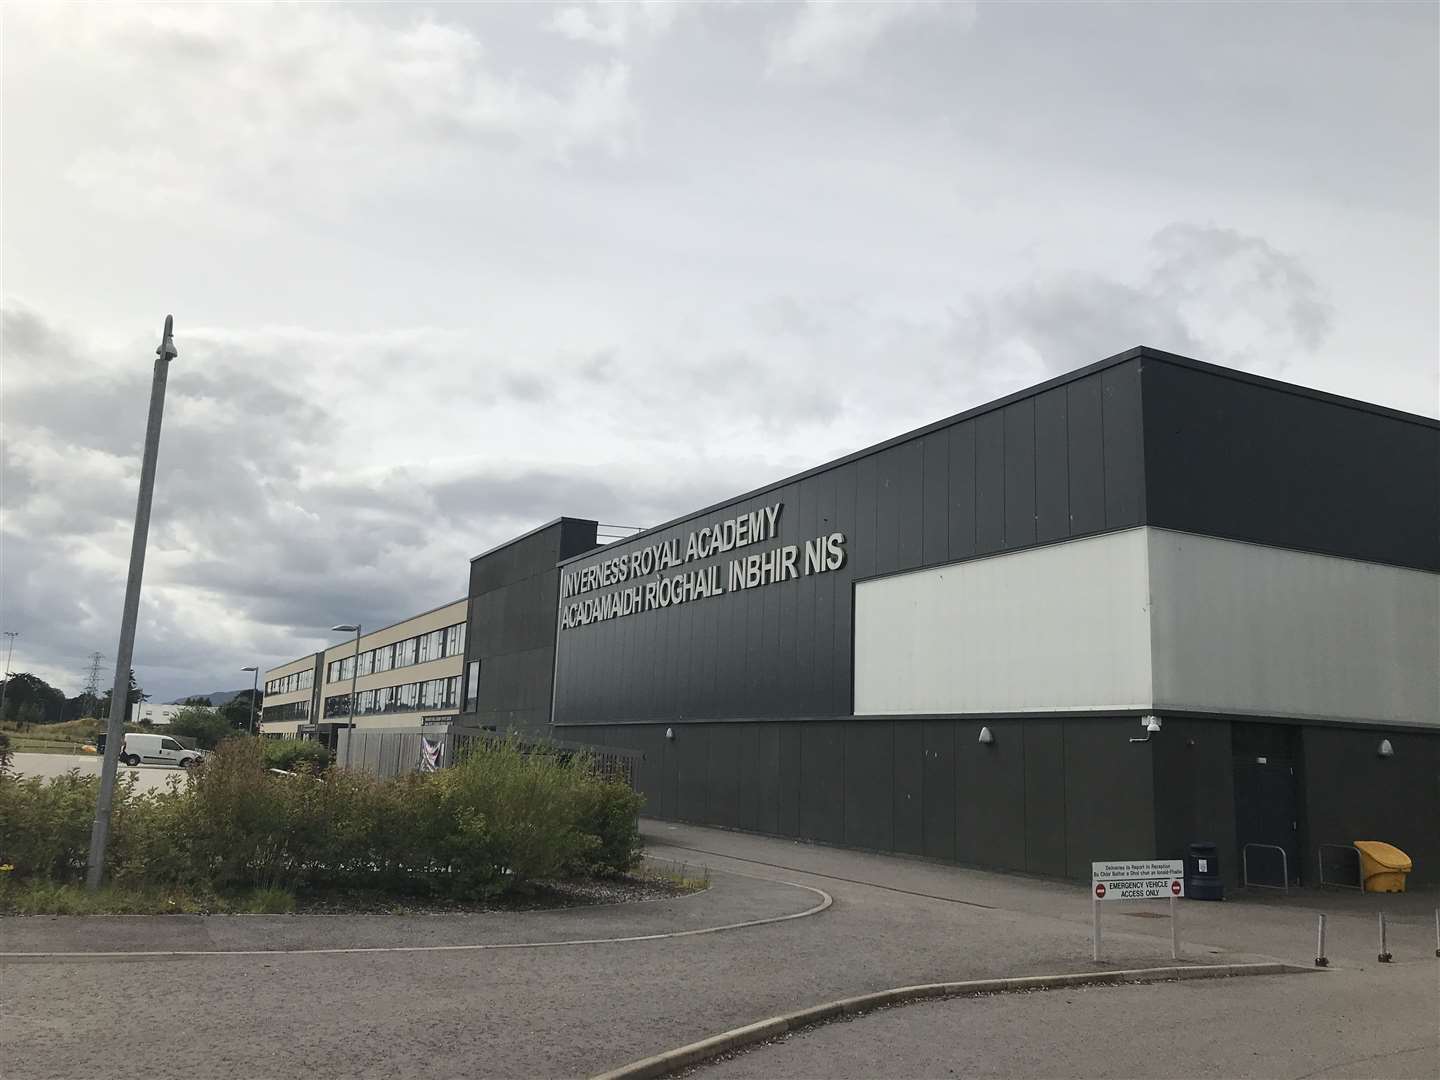 Inverness Royal Academy community sport hub received praise.